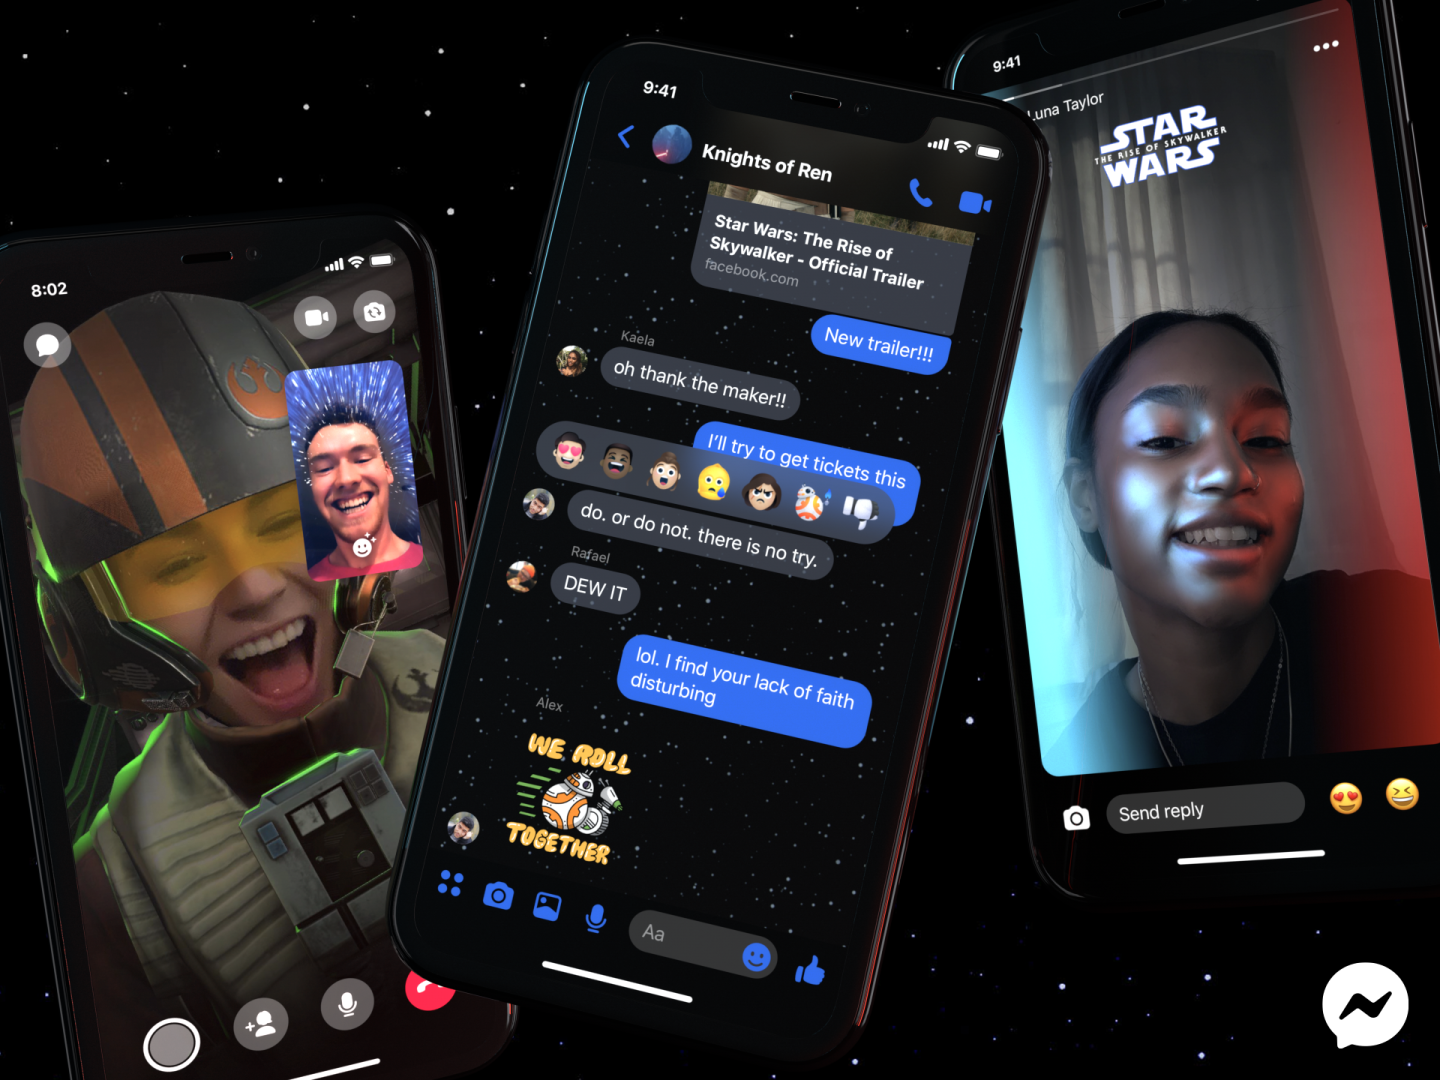 Star Wars: The Rise of Skywalker Messenger features